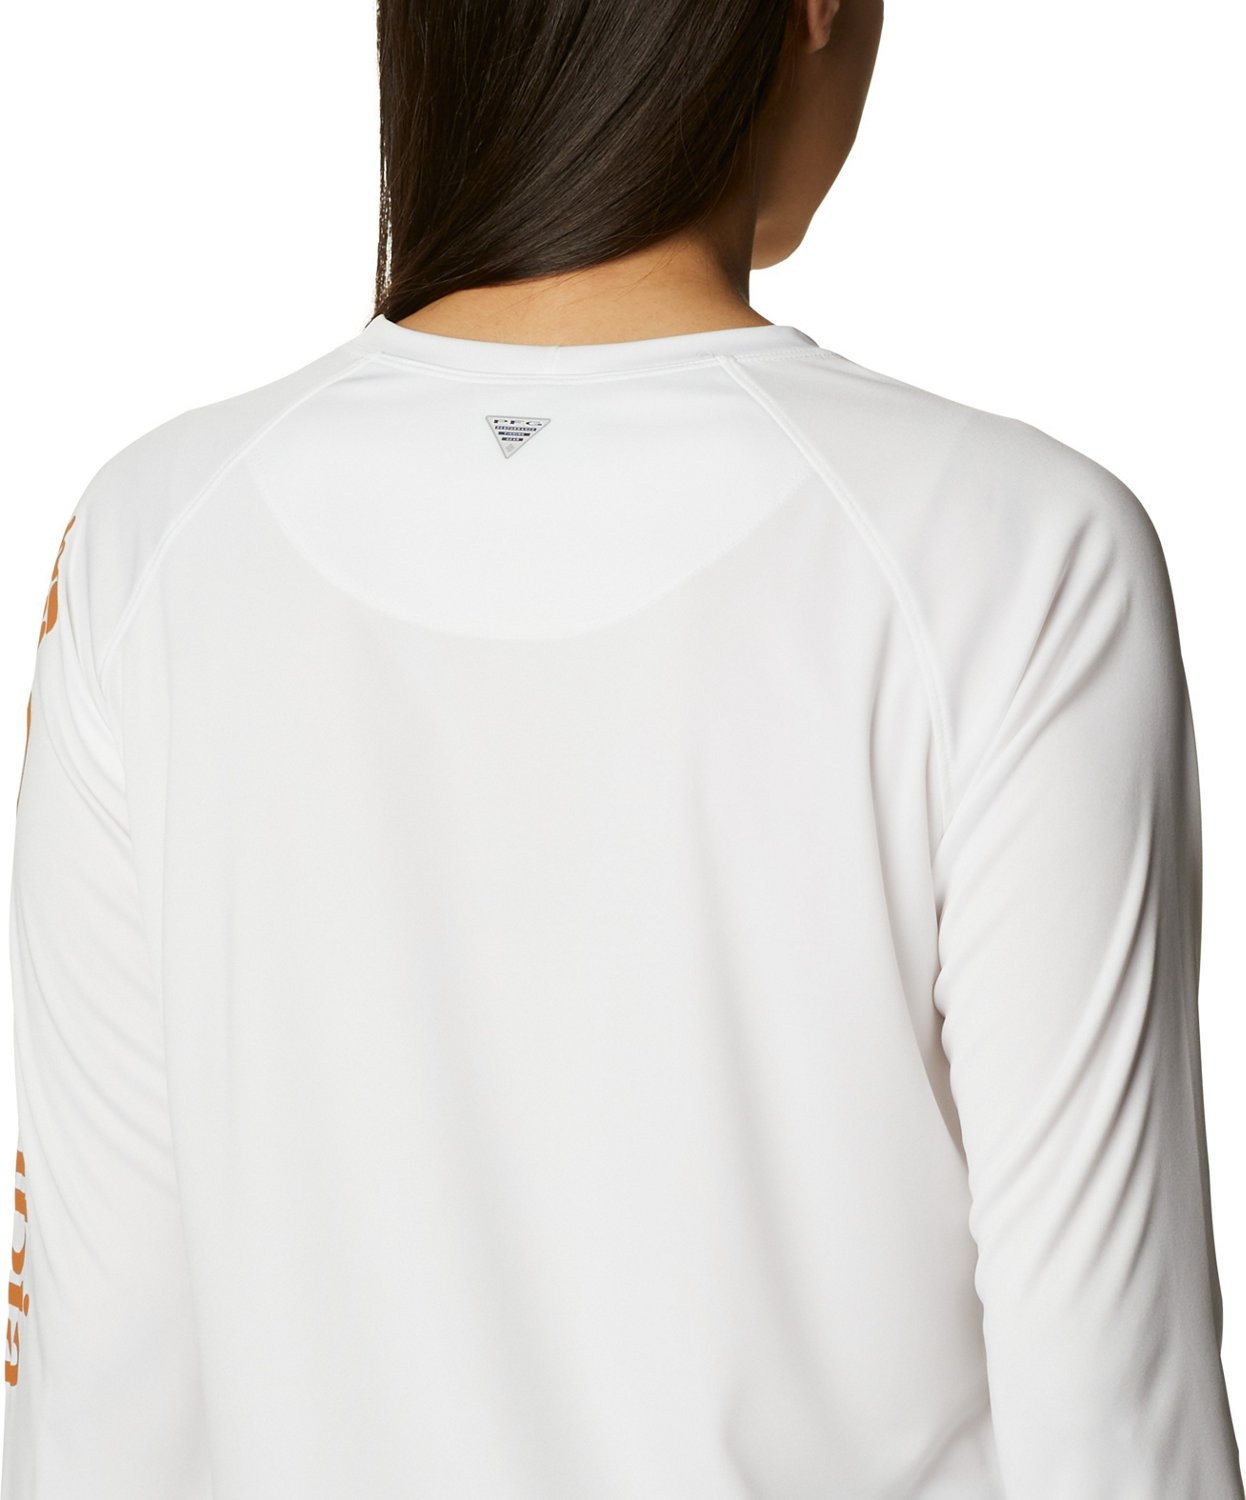 Los Angeles Dodgers Columbia Women's Tidal Long Sleeve Hoodie T-Shirt - Gray